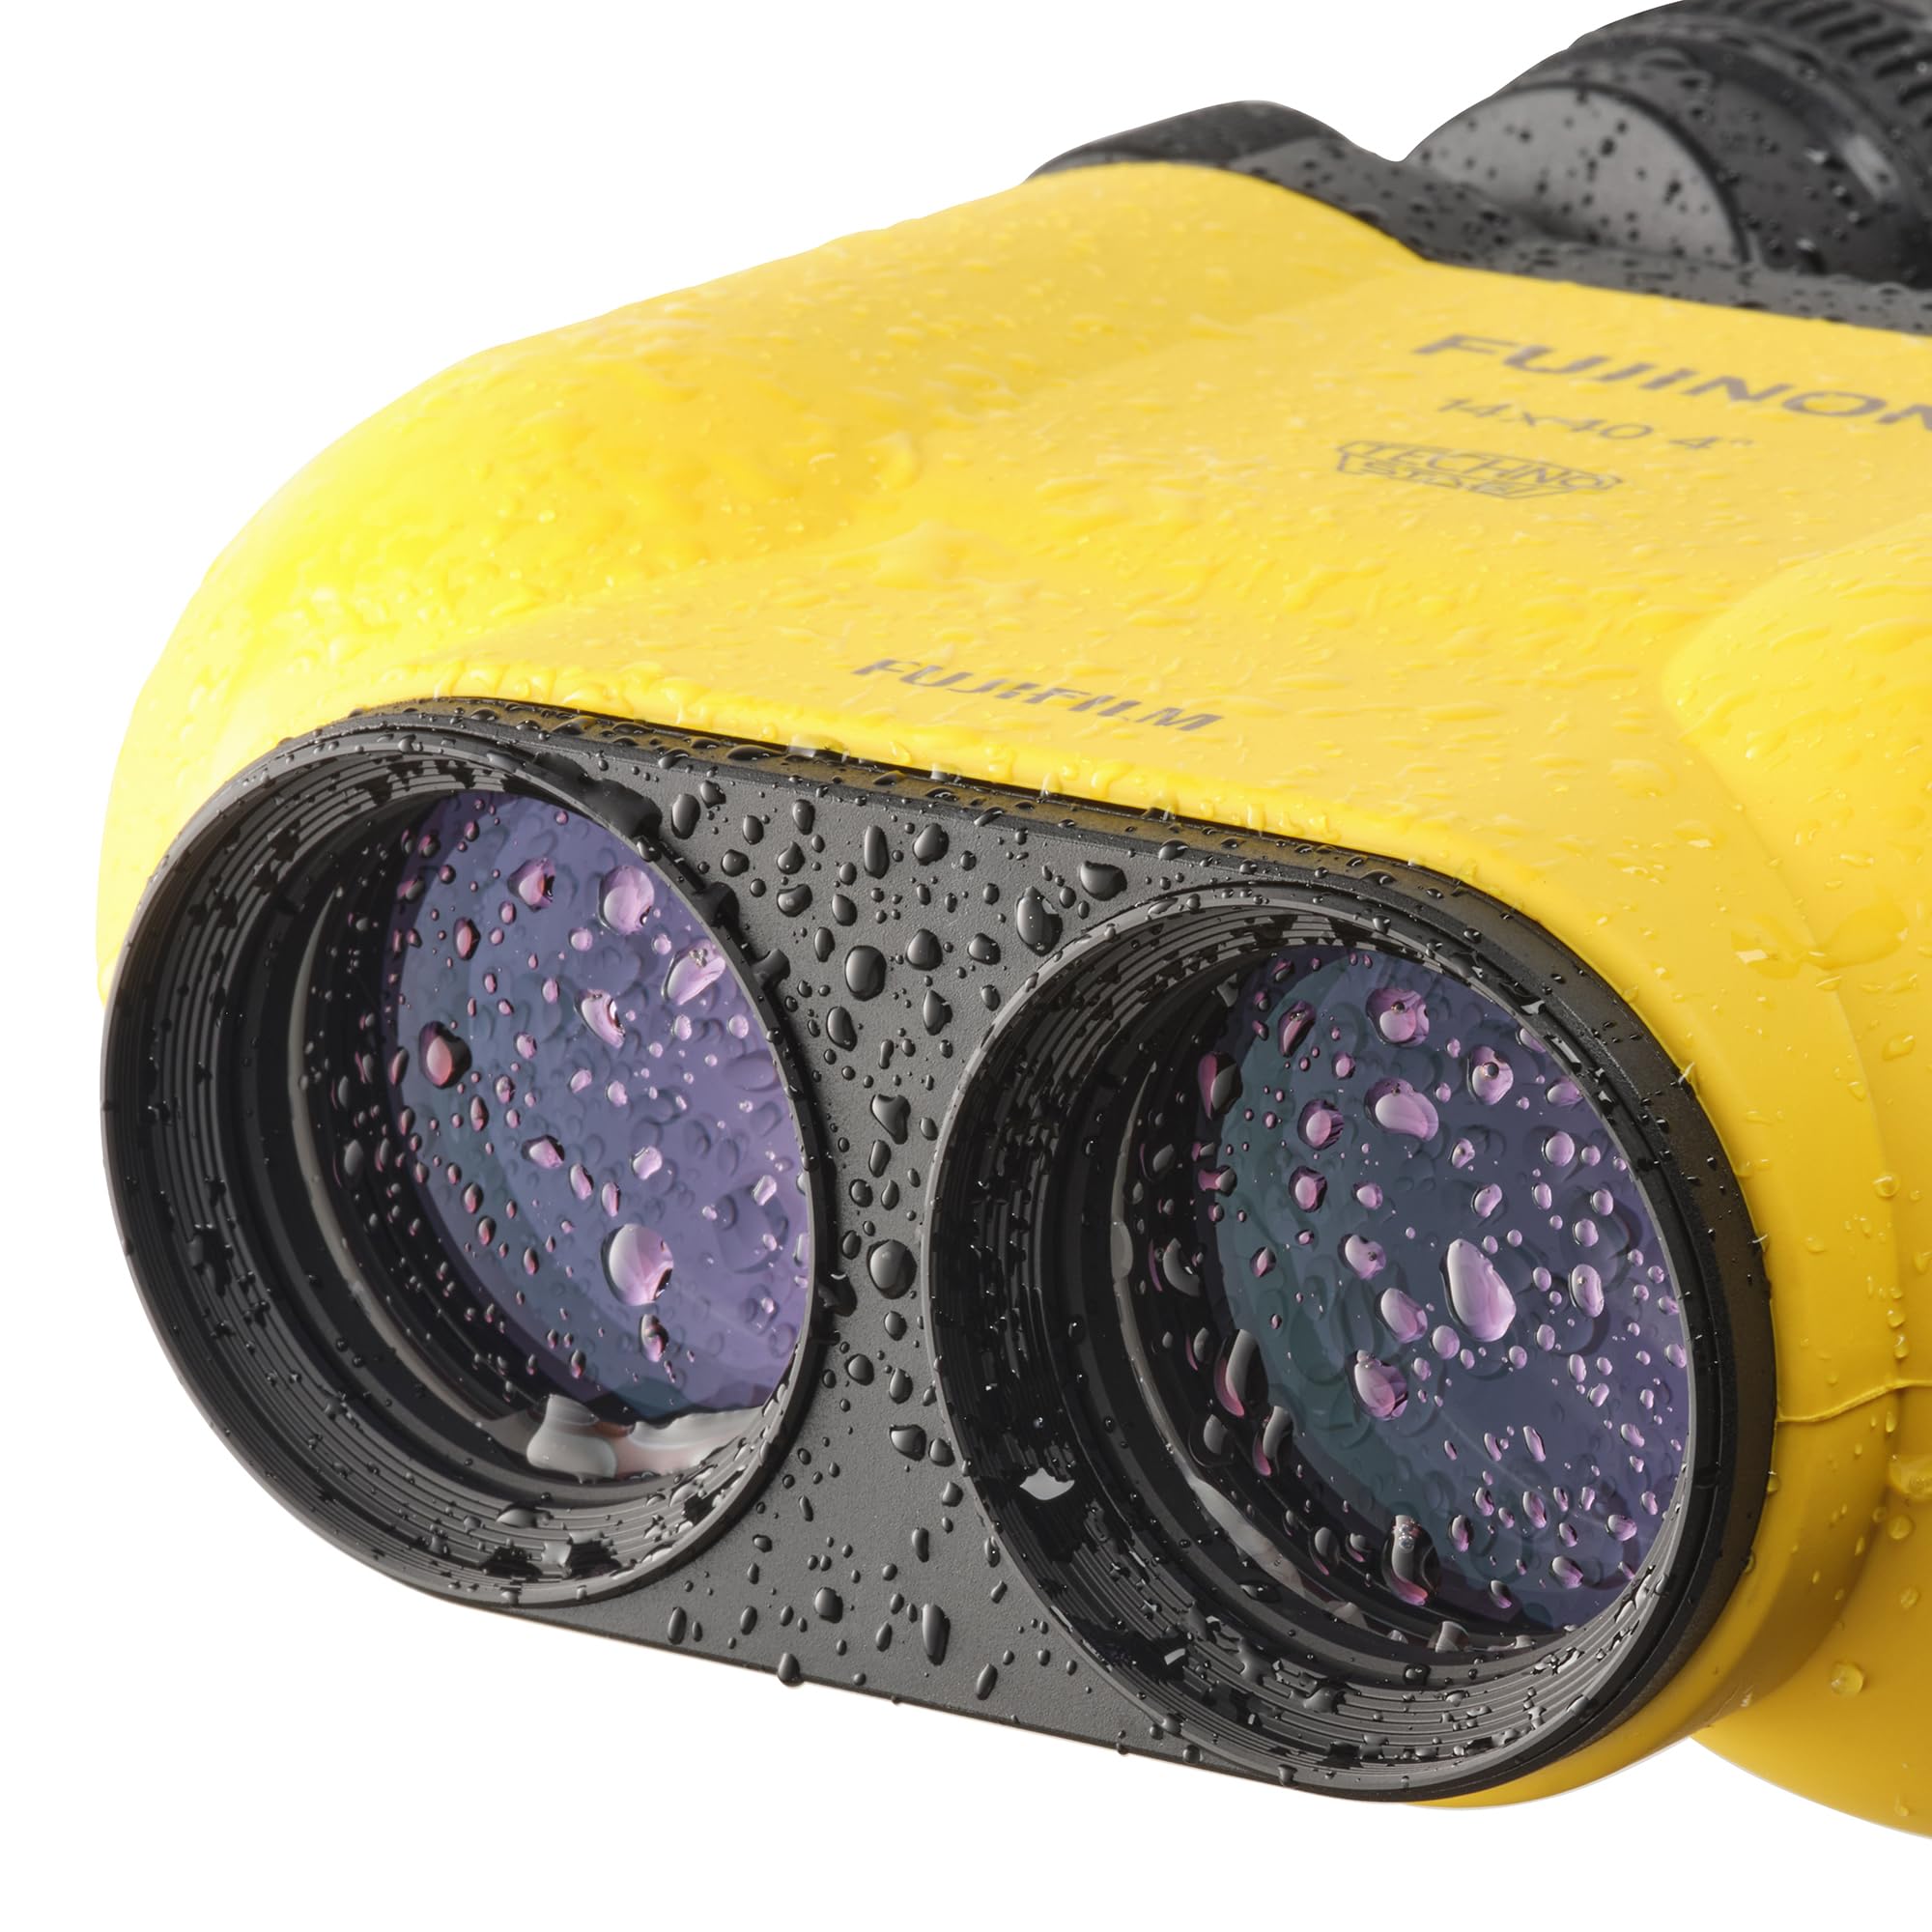 Fujinon Techno-Stabi TS-X 14x40 Image Stabilization Binocular - Yellow